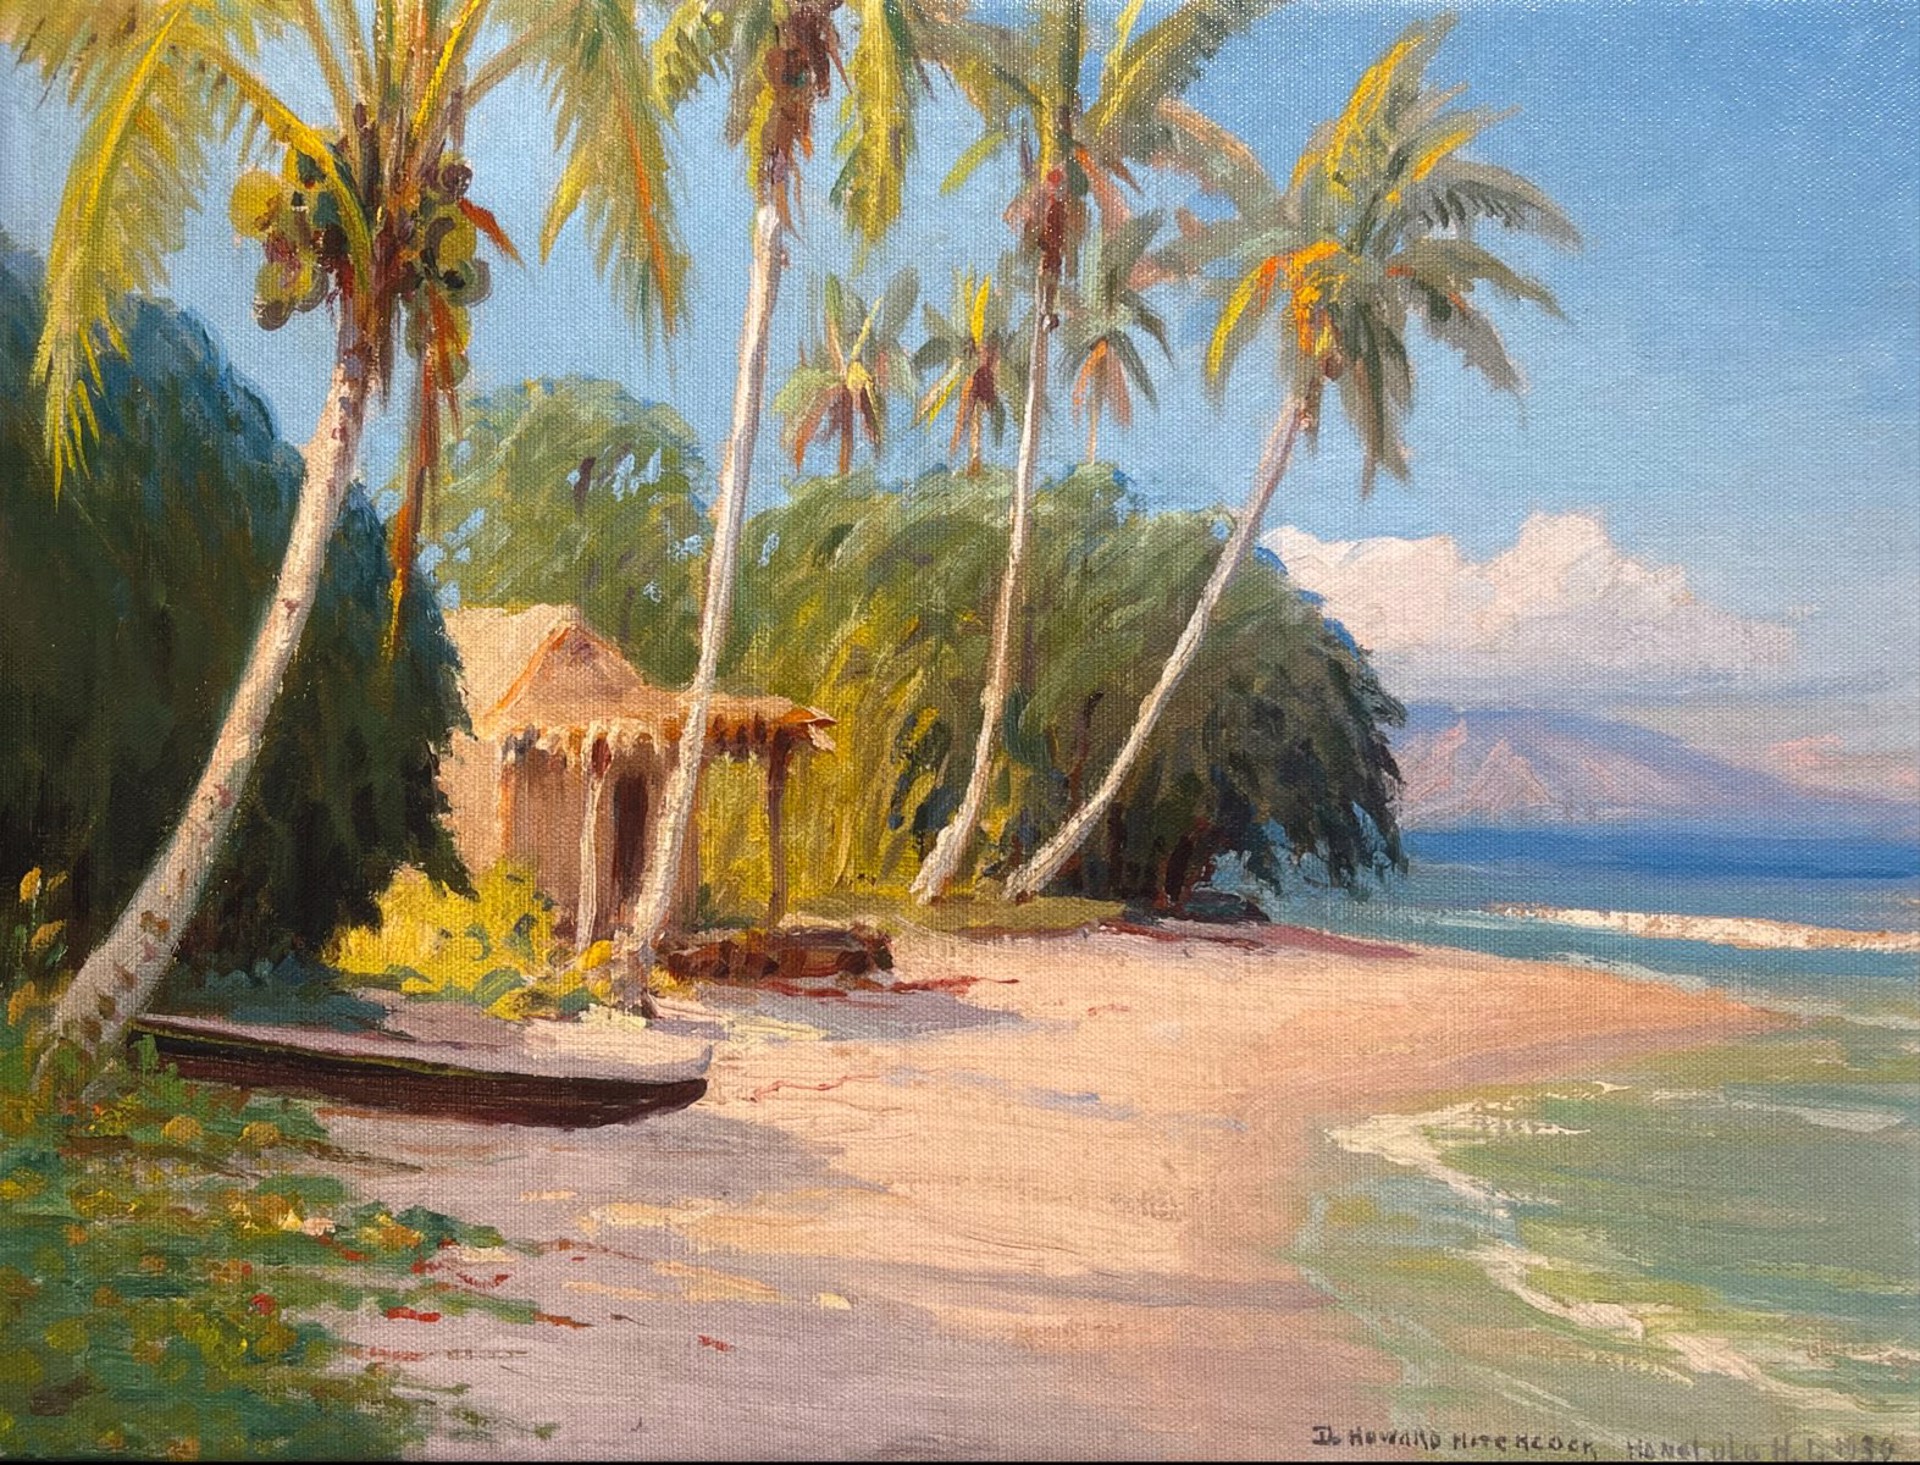 Honolulu by D. Howard Hitchcock